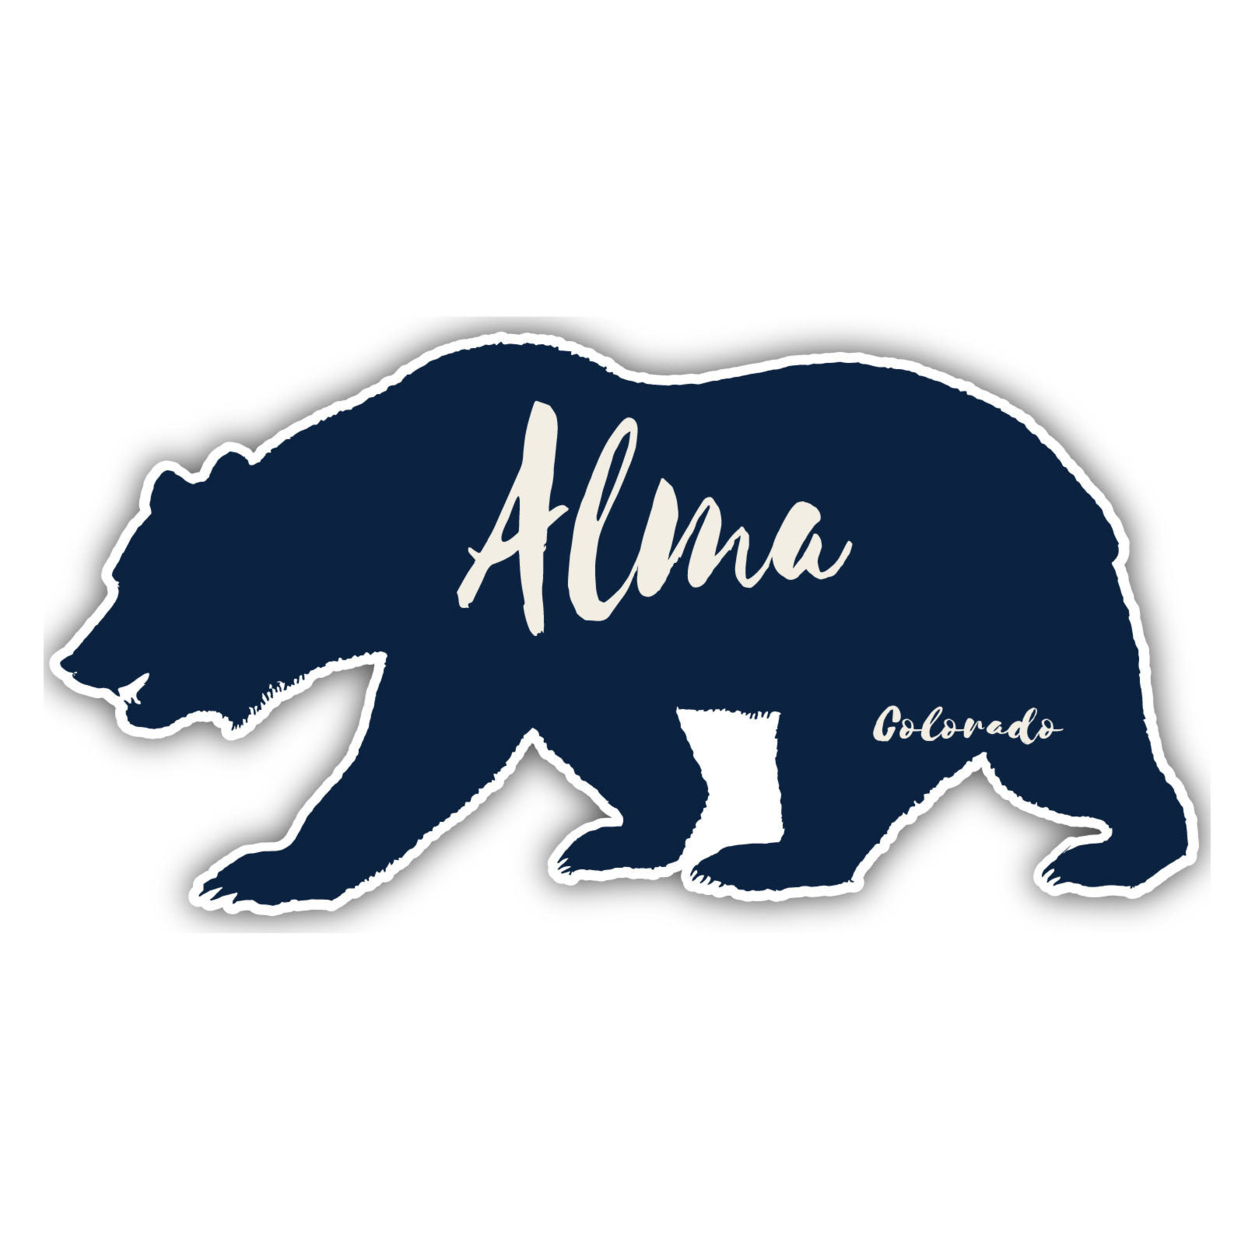 Alma Colorado Souvenir Decorative Stickers (Choose Theme And Size) - 4-Pack, 12-Inch, Bear